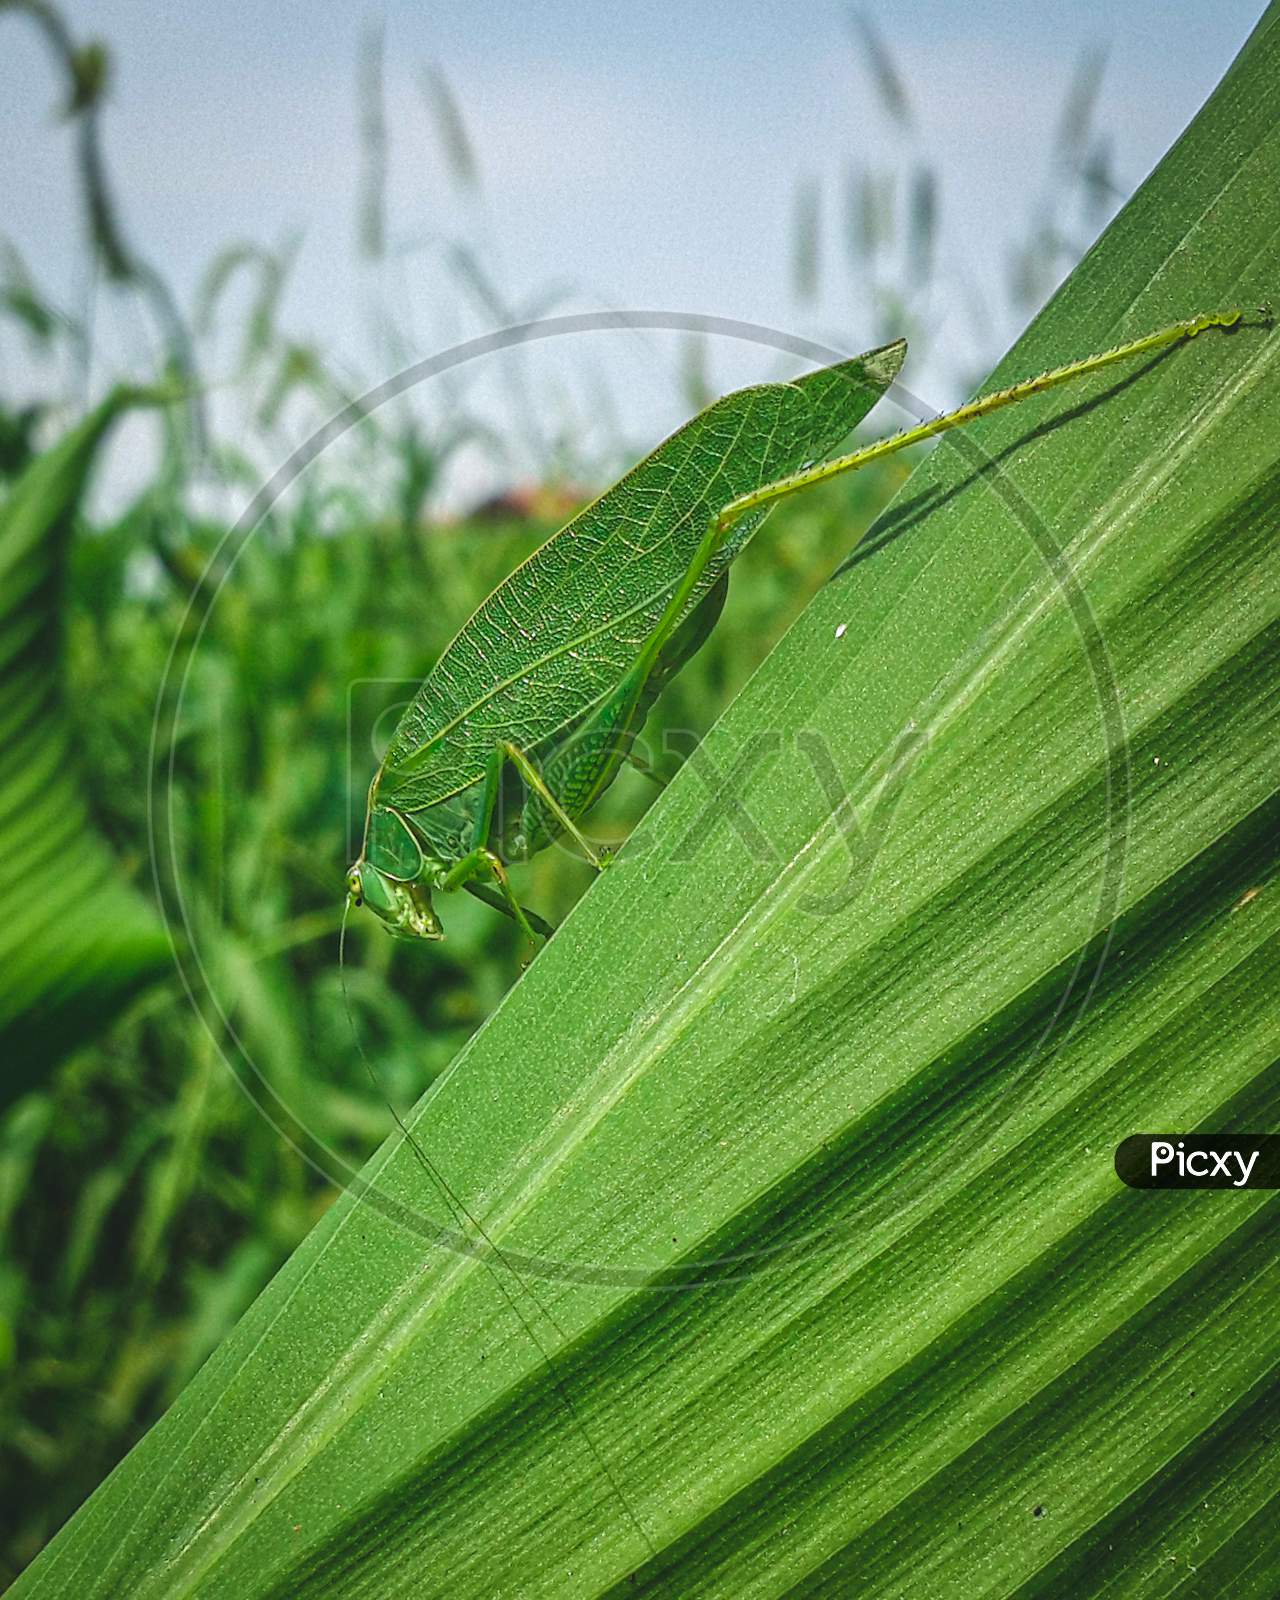 Green bush cricket grasshopper on a large leaf looking down